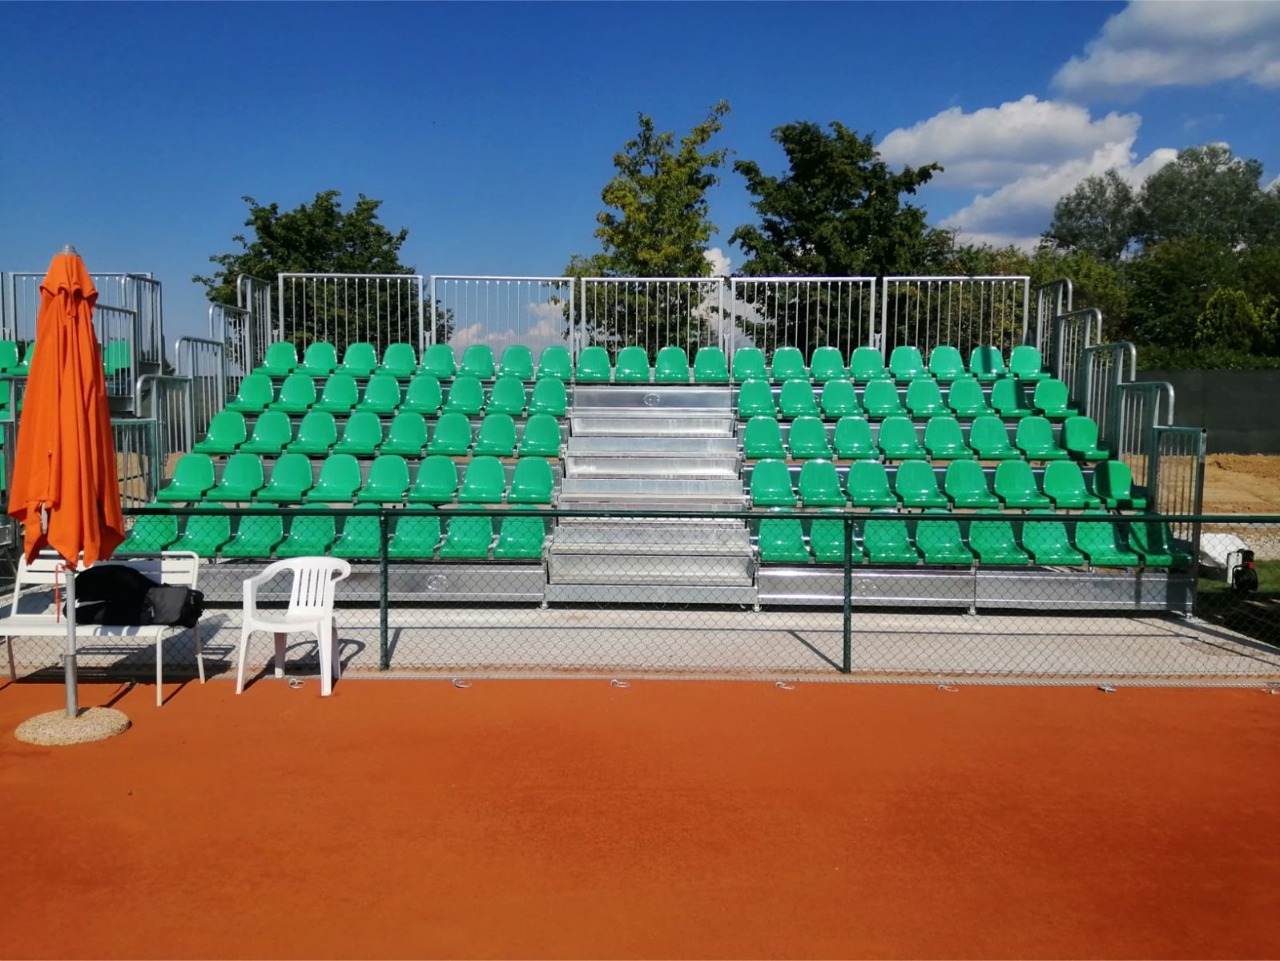 Gallery foto n.1 Prefabricated stand G2M5/0 - Tennis Academy 